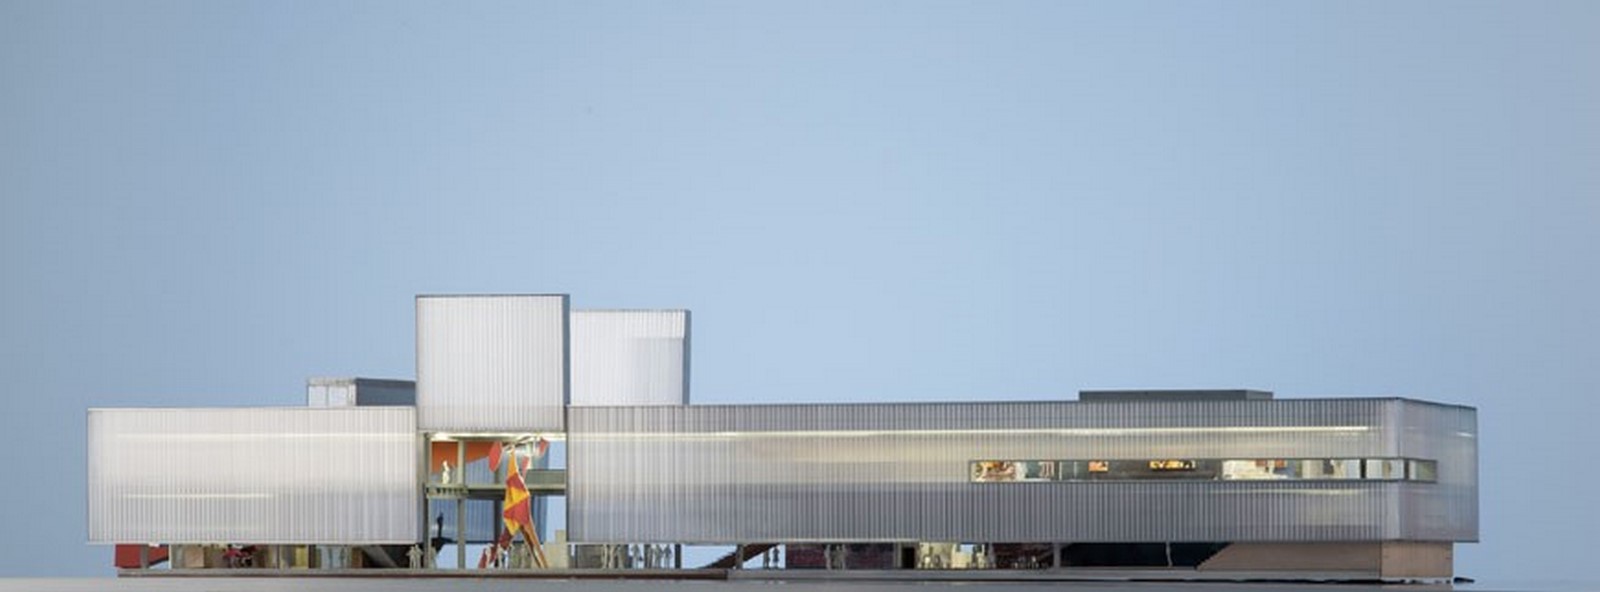 Garage Art Musuem of Contemporary Art by Rem Koolhaas - Sheet6